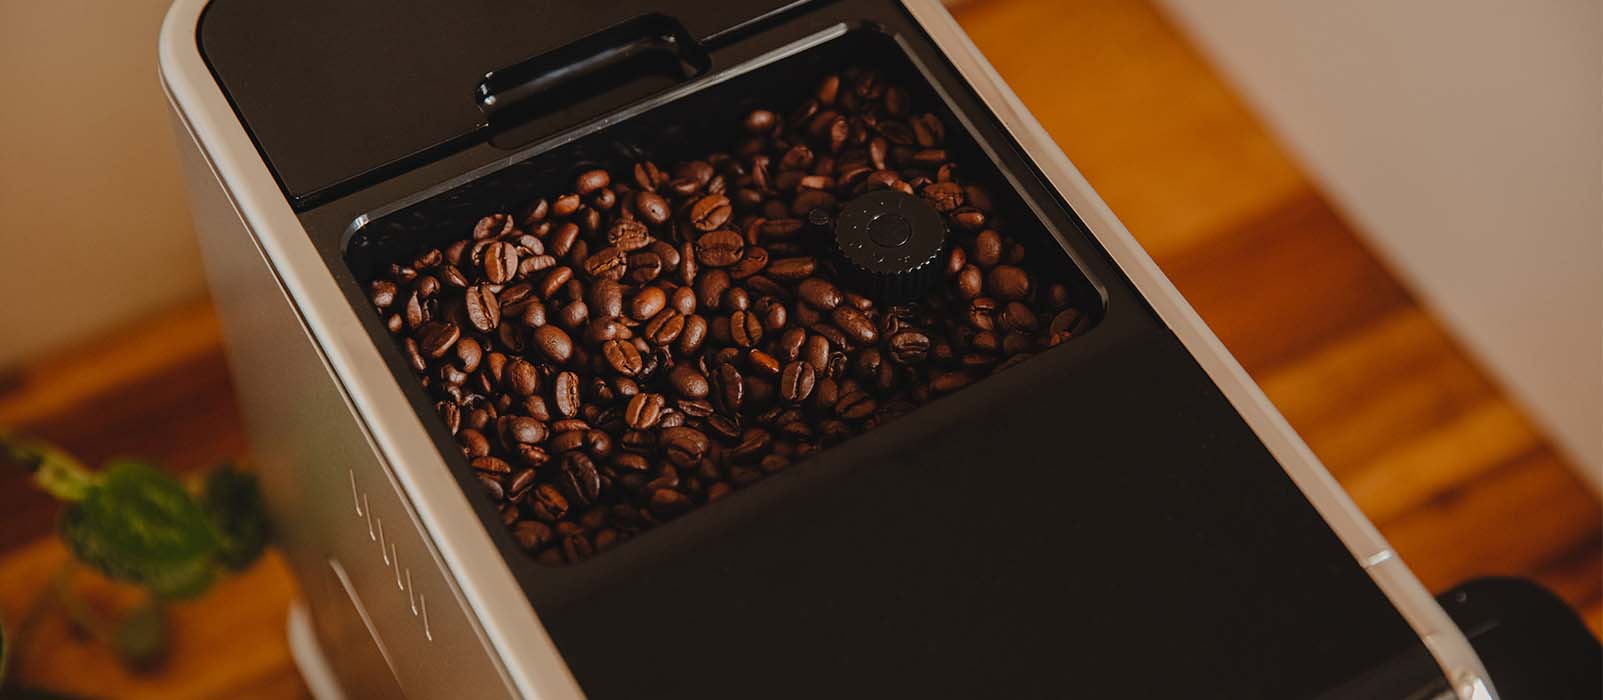 adjust grinder espresso coffee grinder